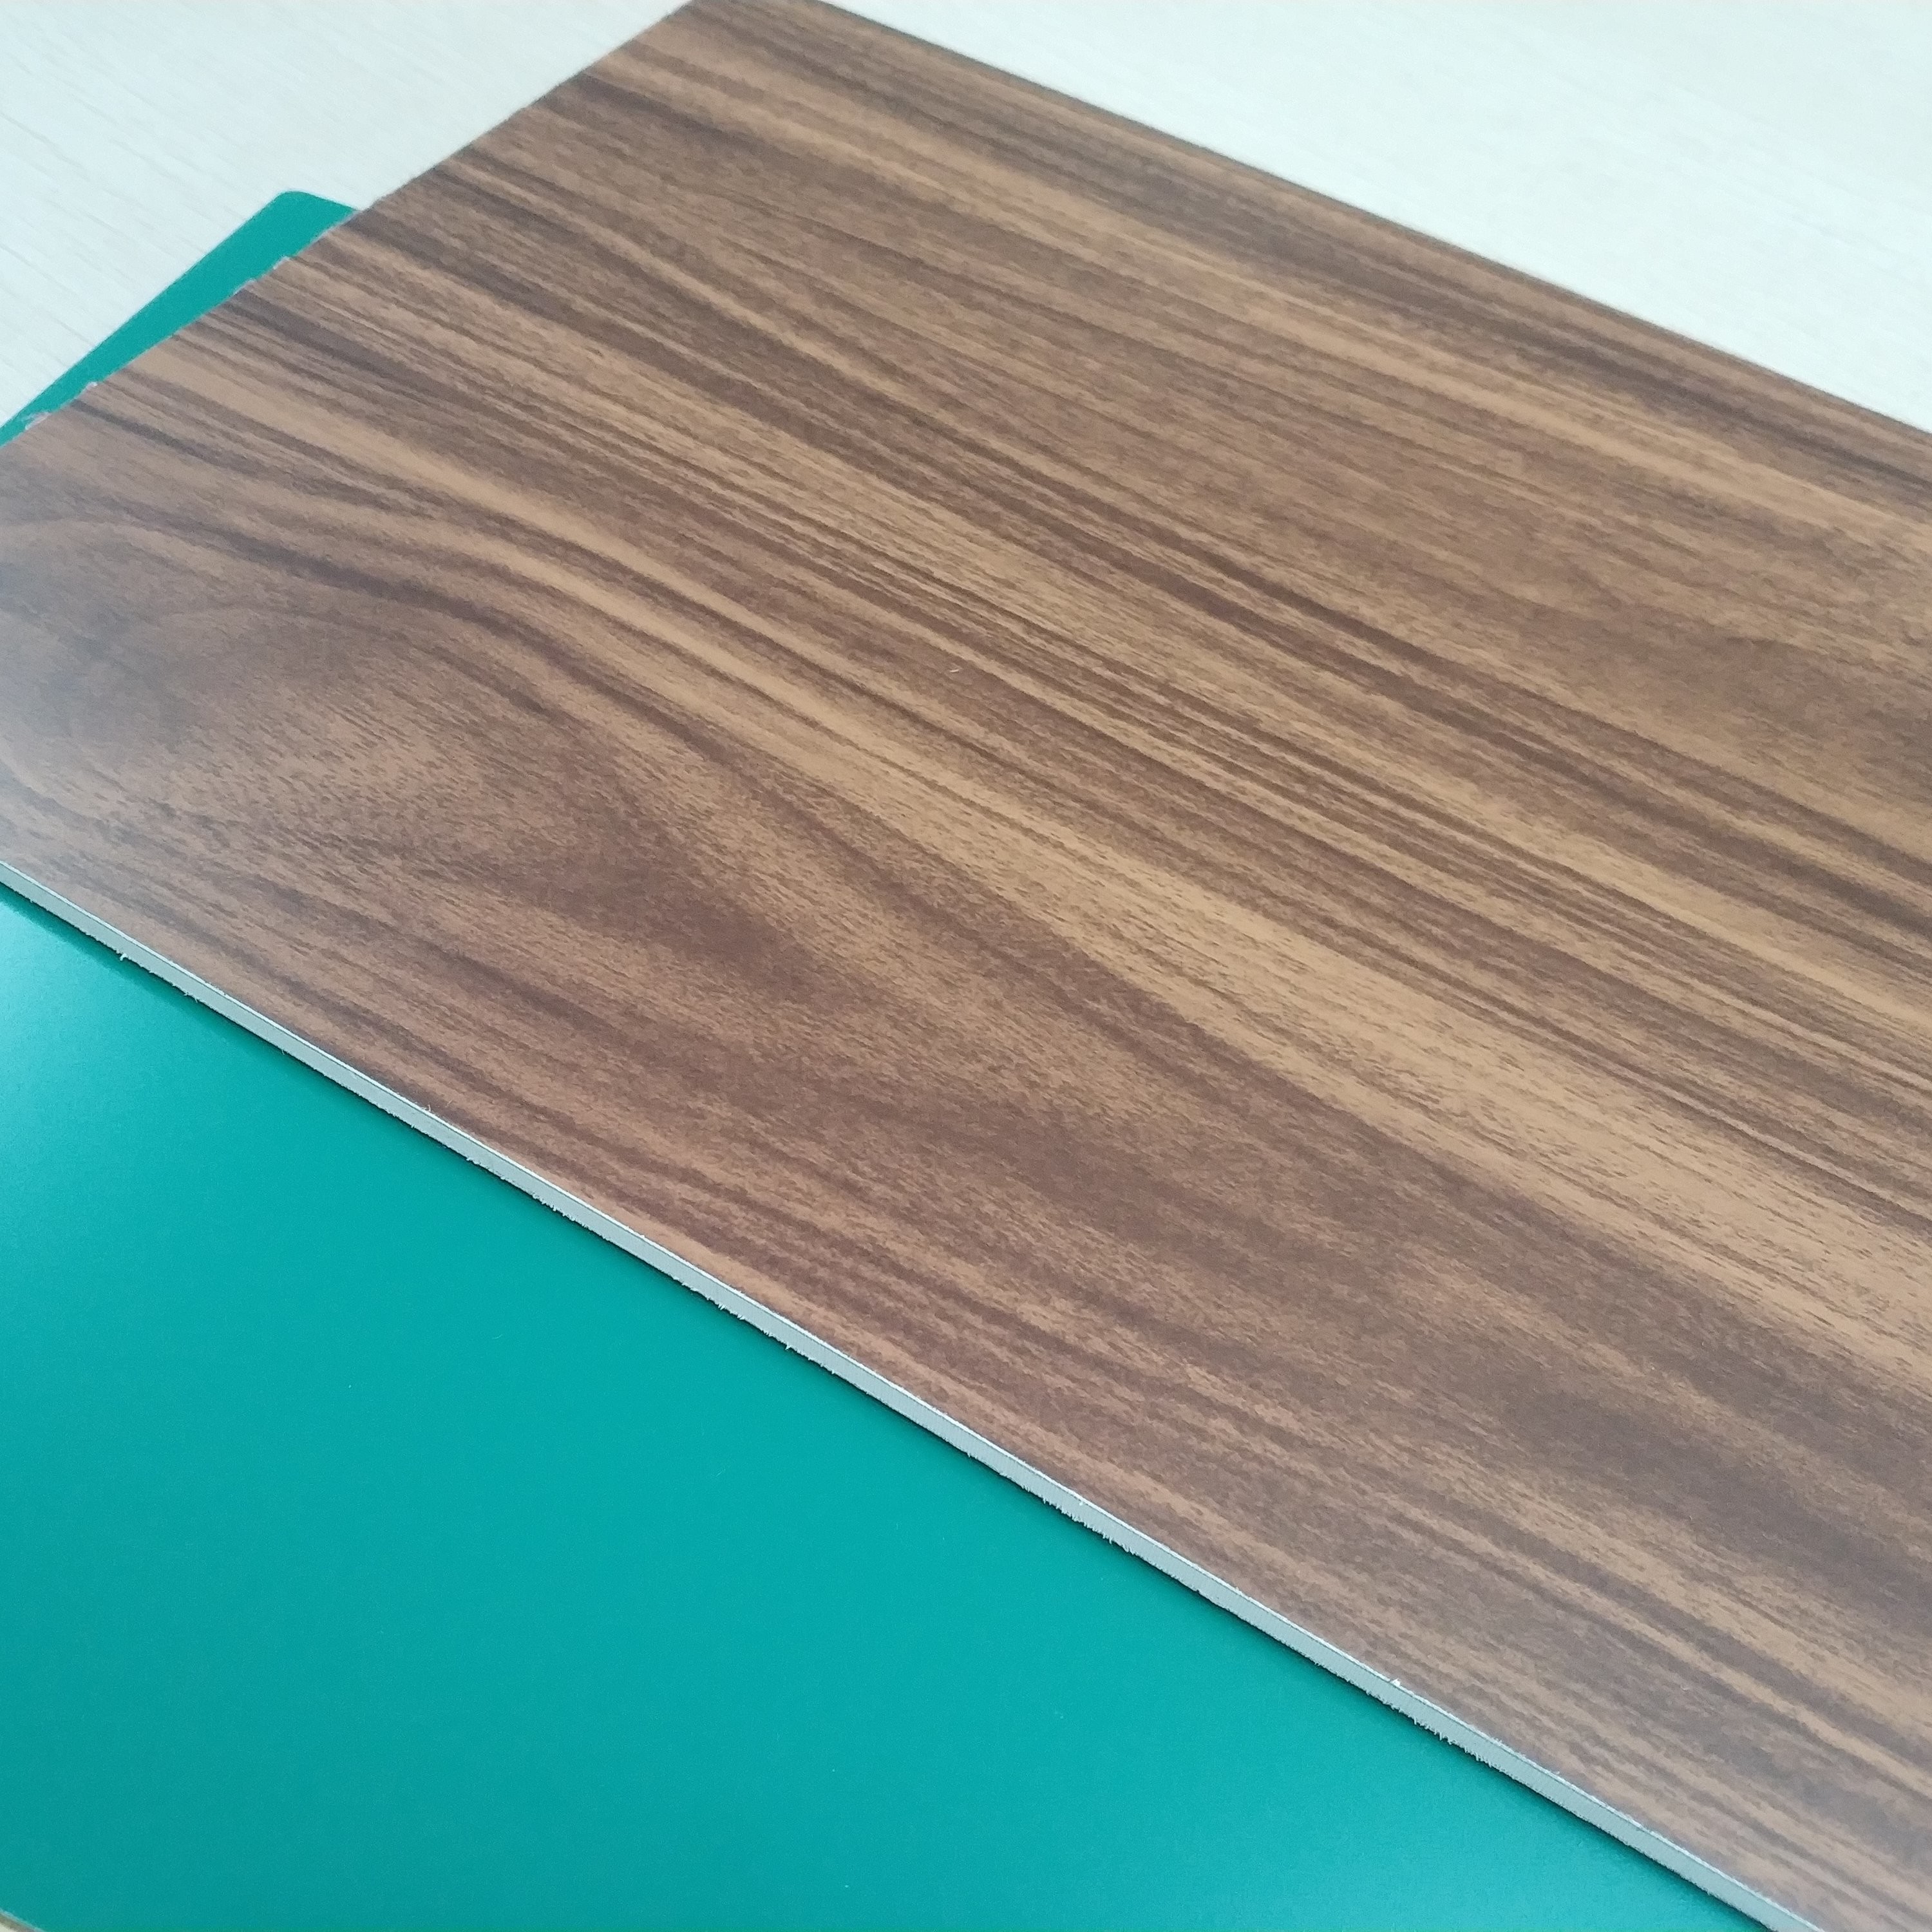 Quality Wooden Wood Granite Aluminium Decorative Composite Panels , Alu Composite Panel Marble Look for sale